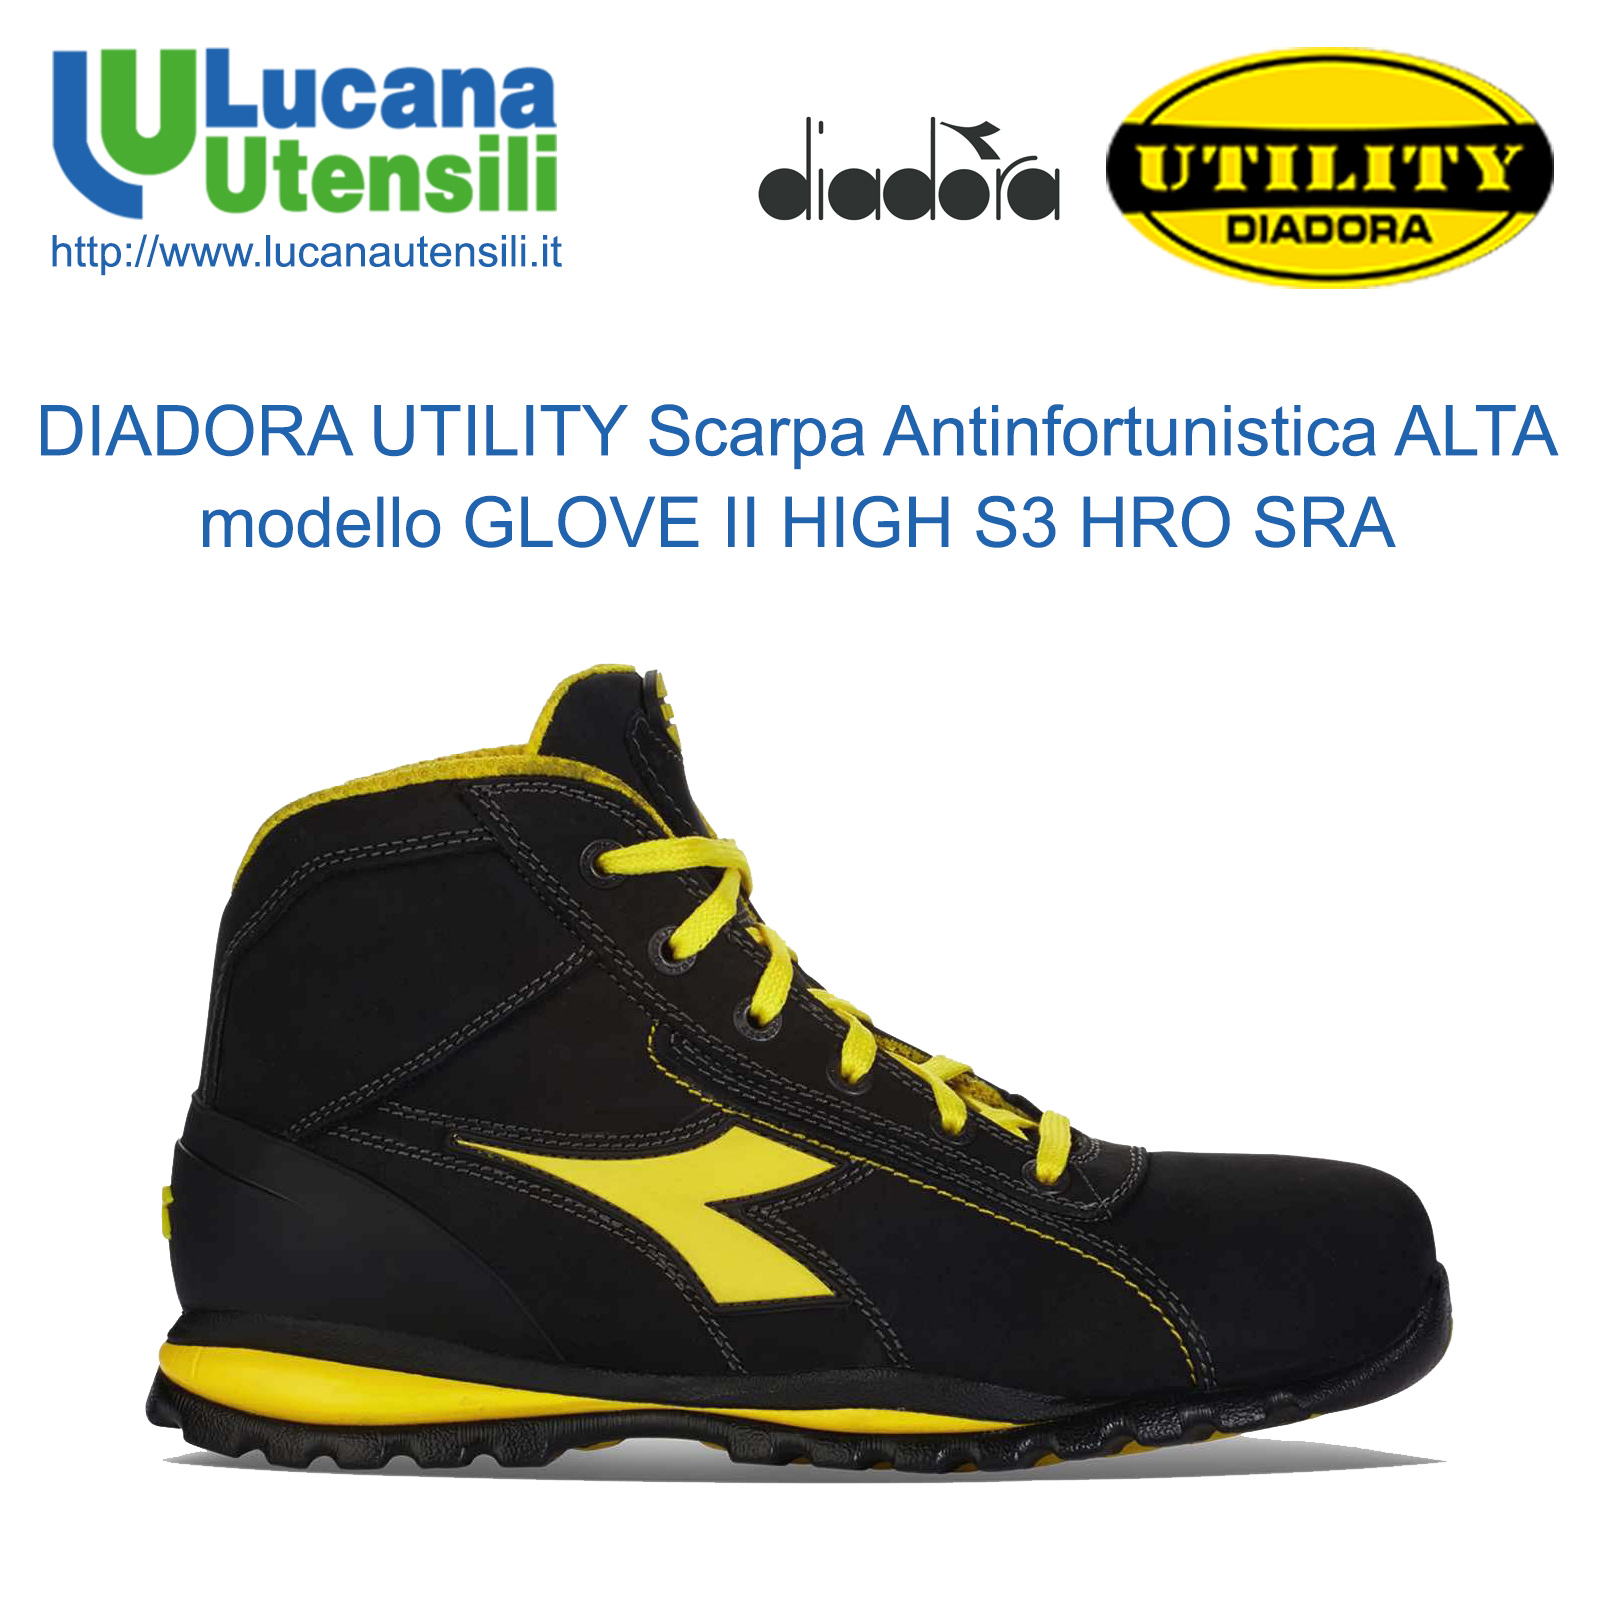 diadora utility glove ii high s3 hro sra